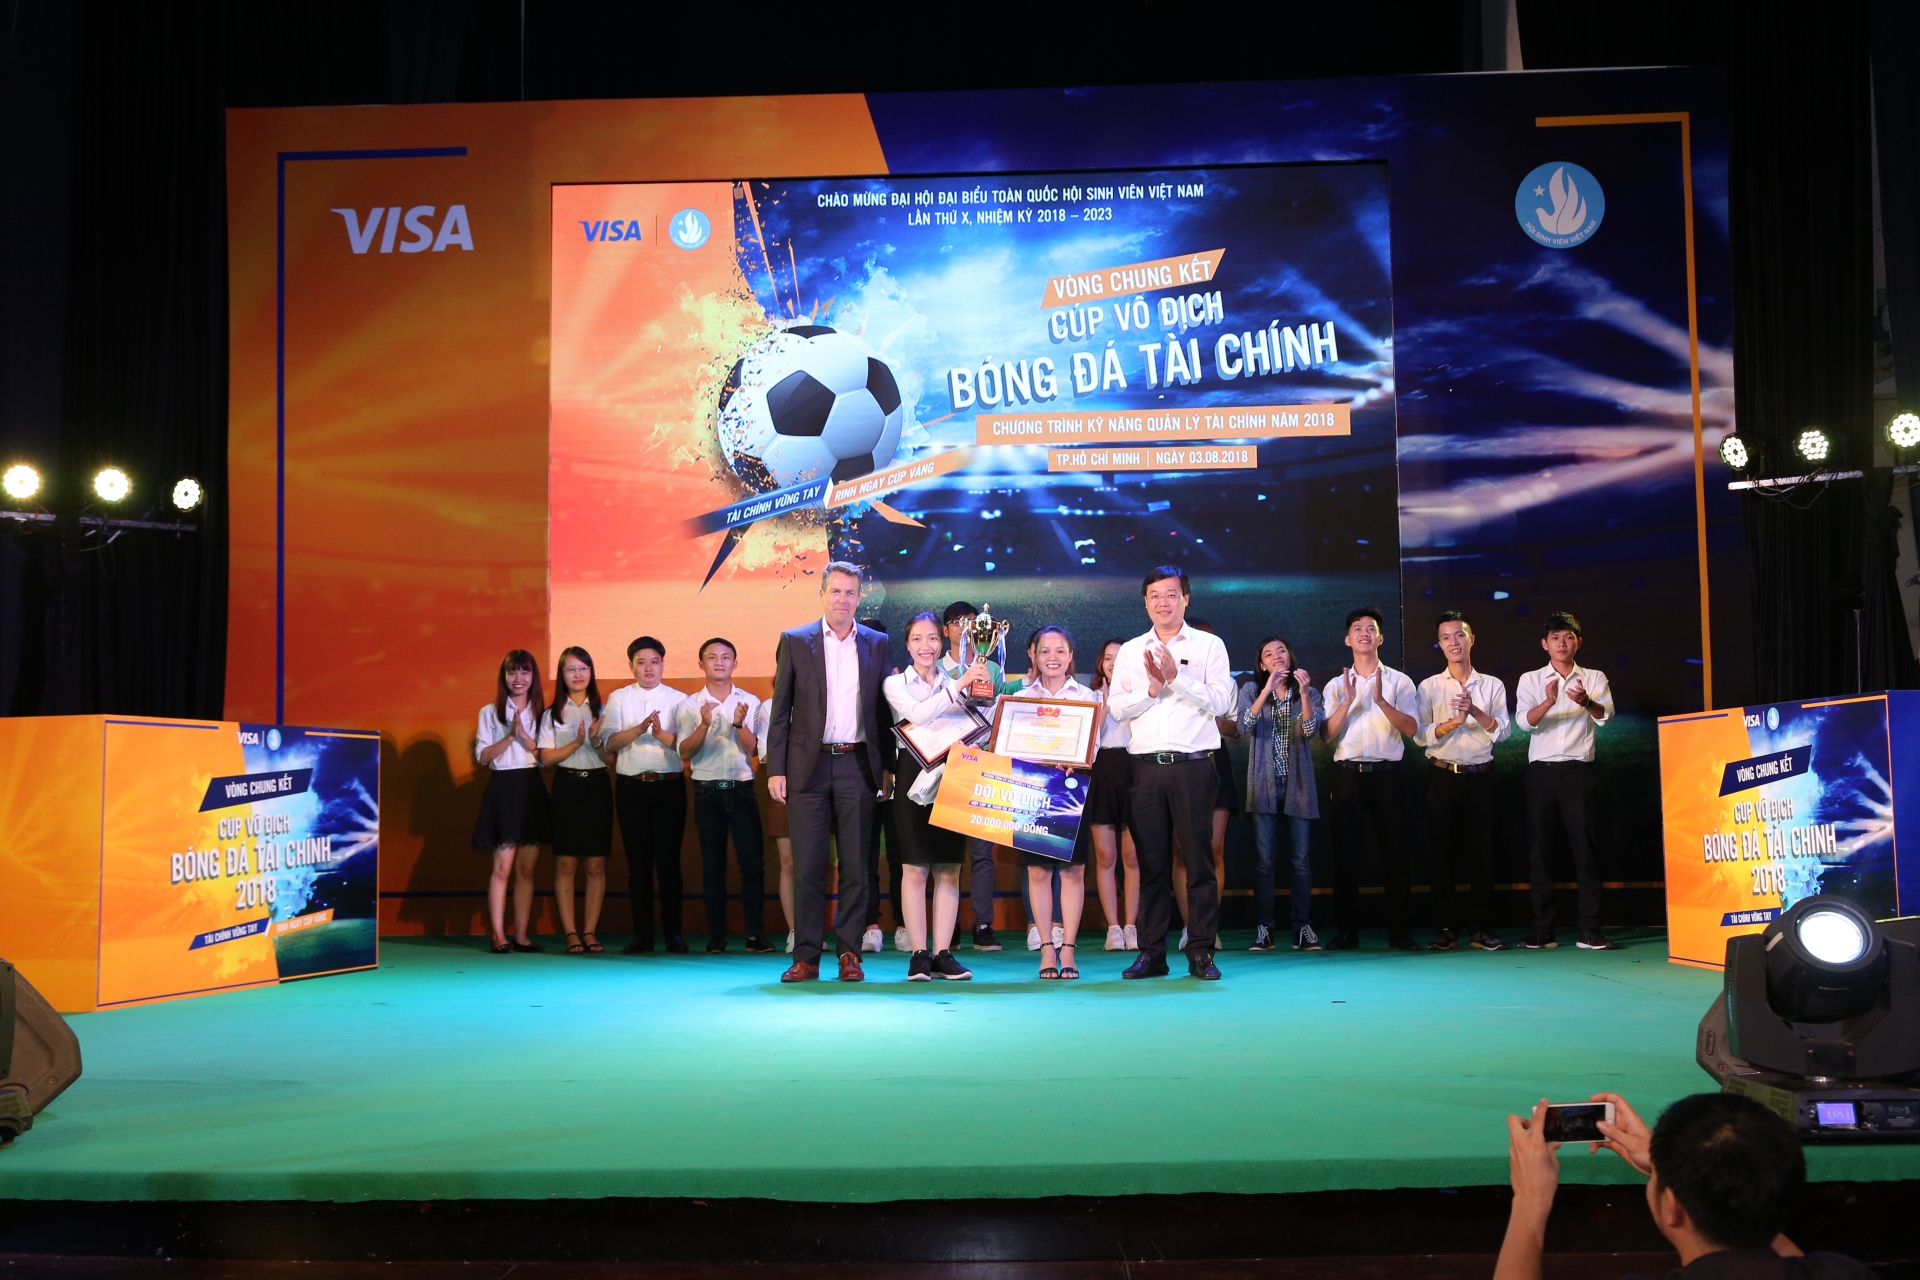 visa 2018 financial football championship sees spectacular finale